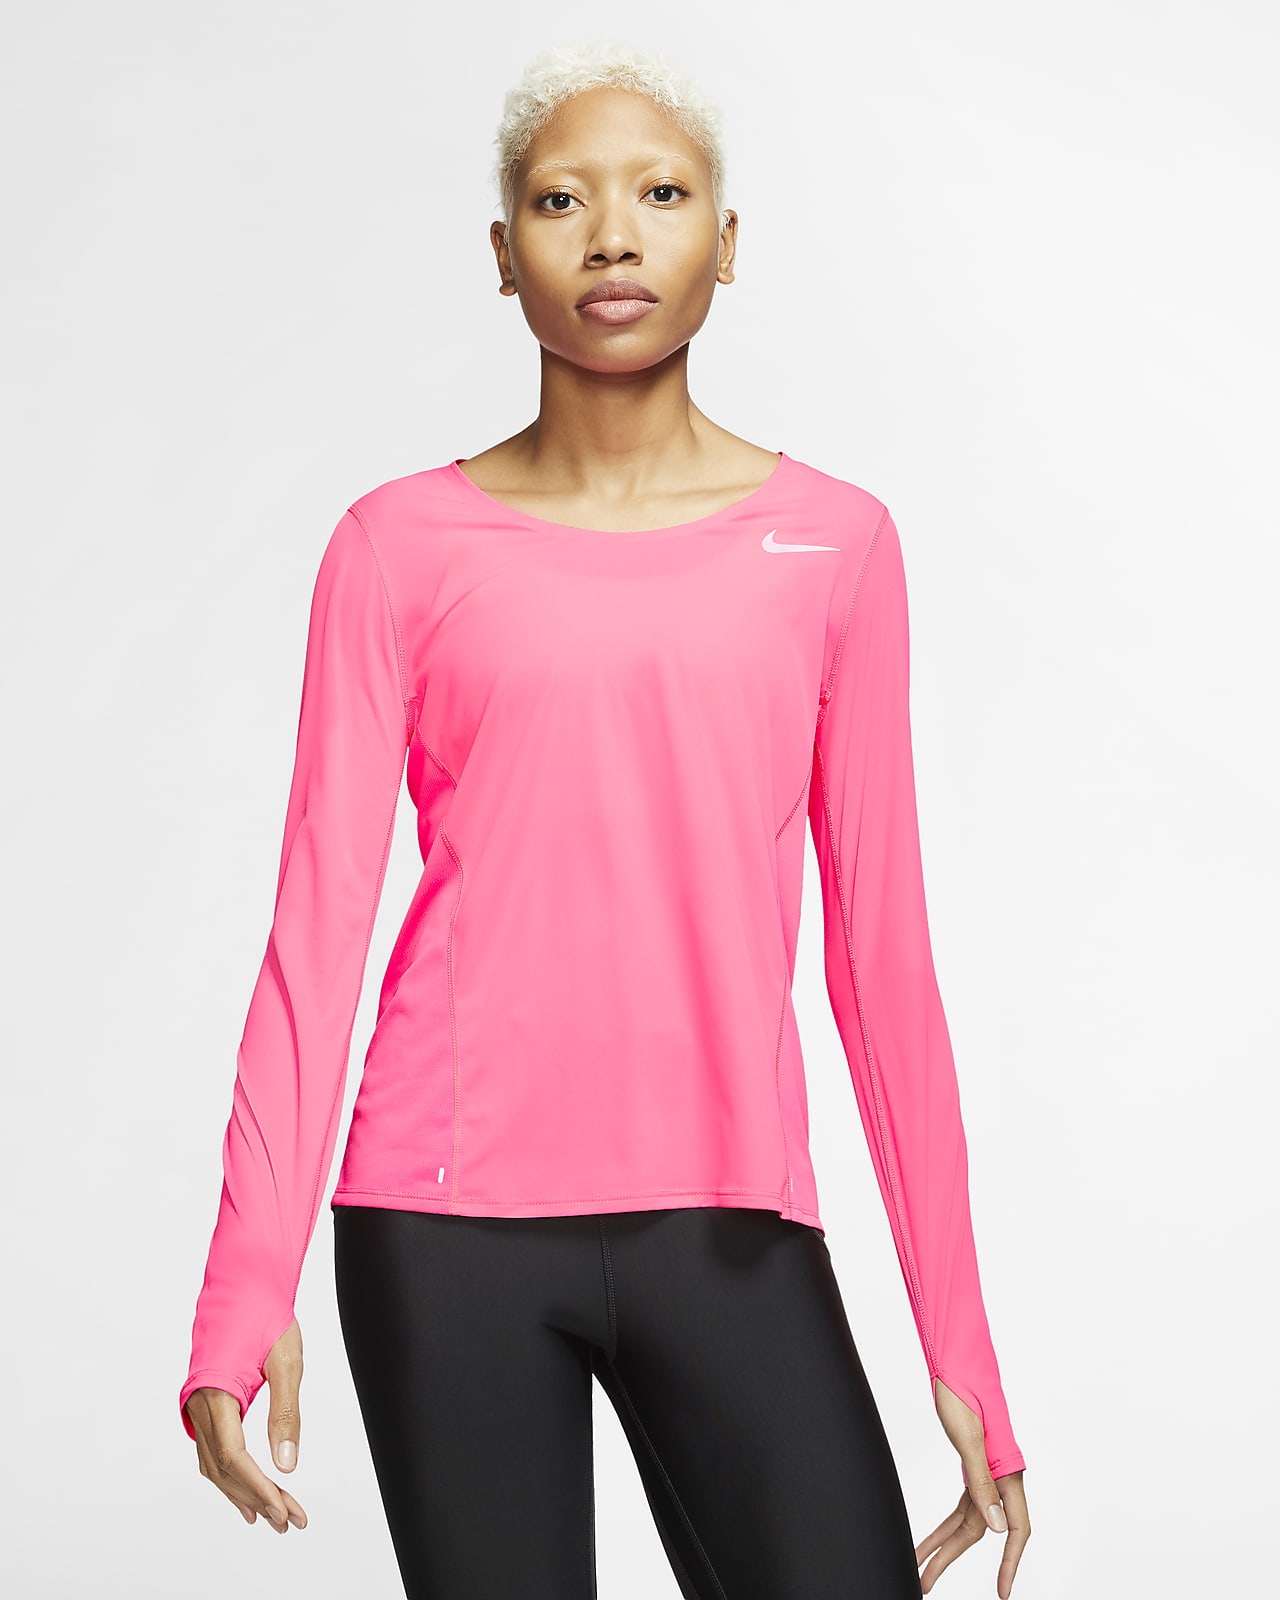 Long-Sleeve Running Top. Nike GB